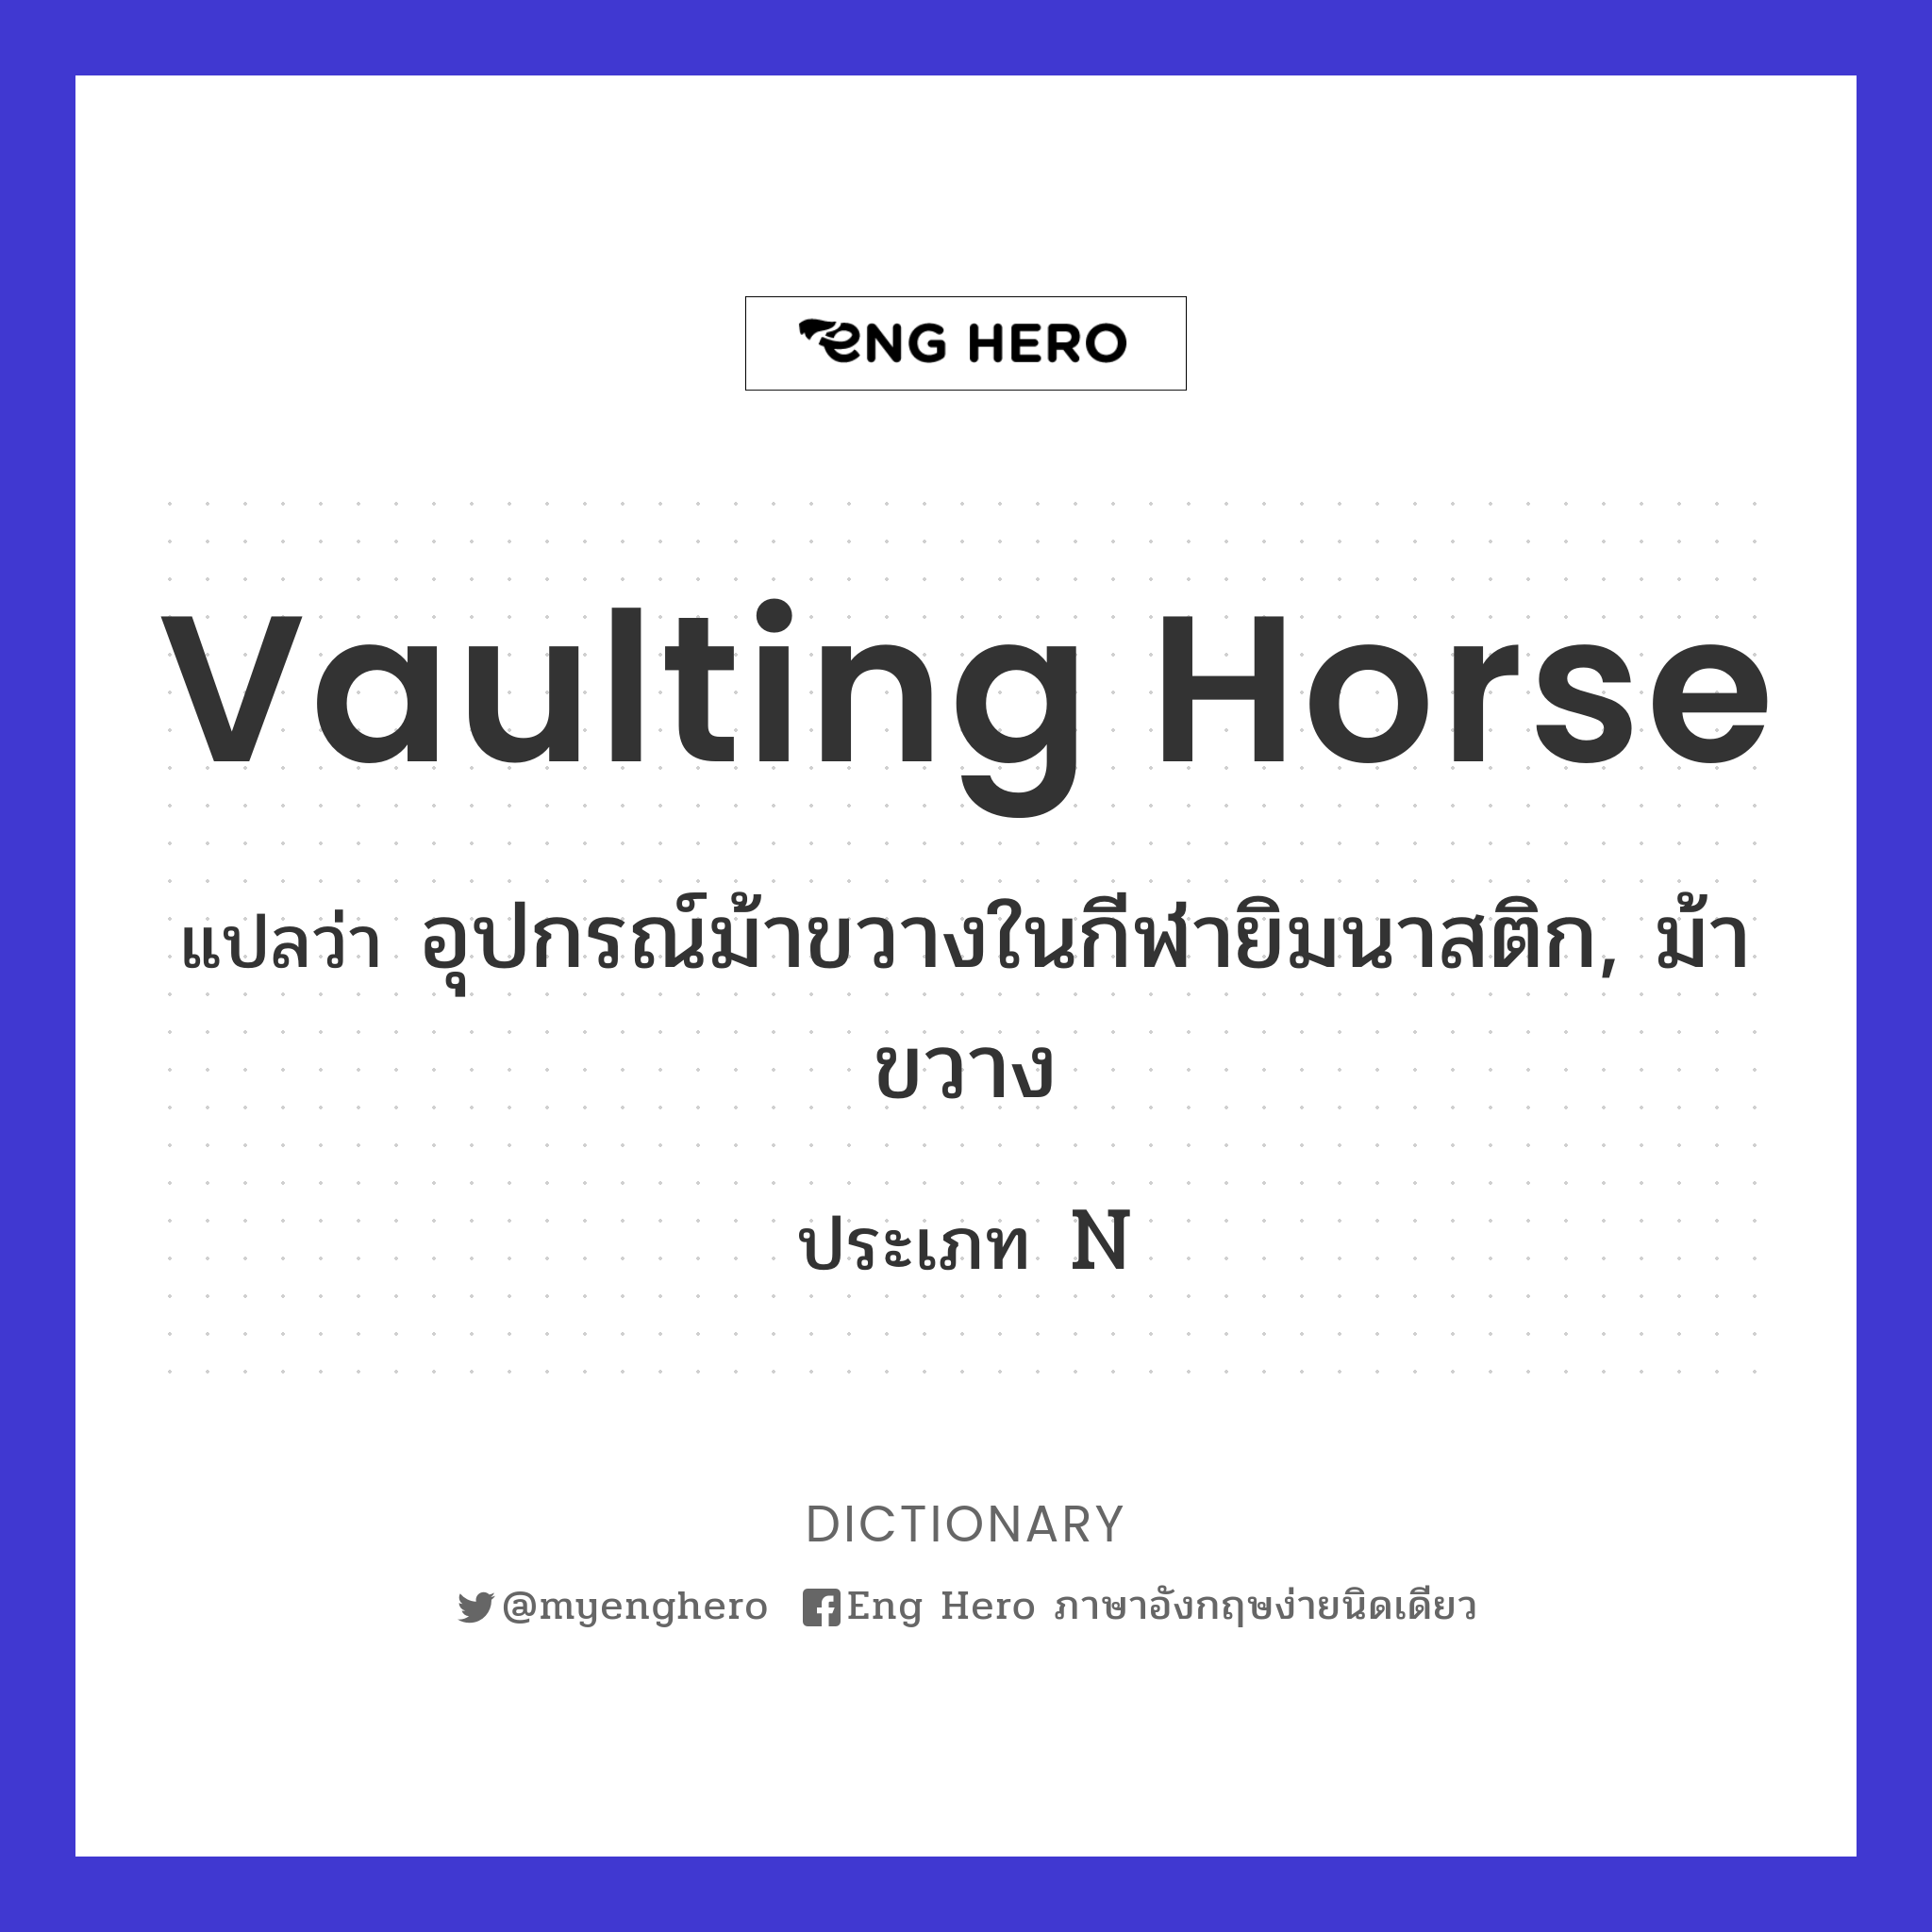 vaulting horse